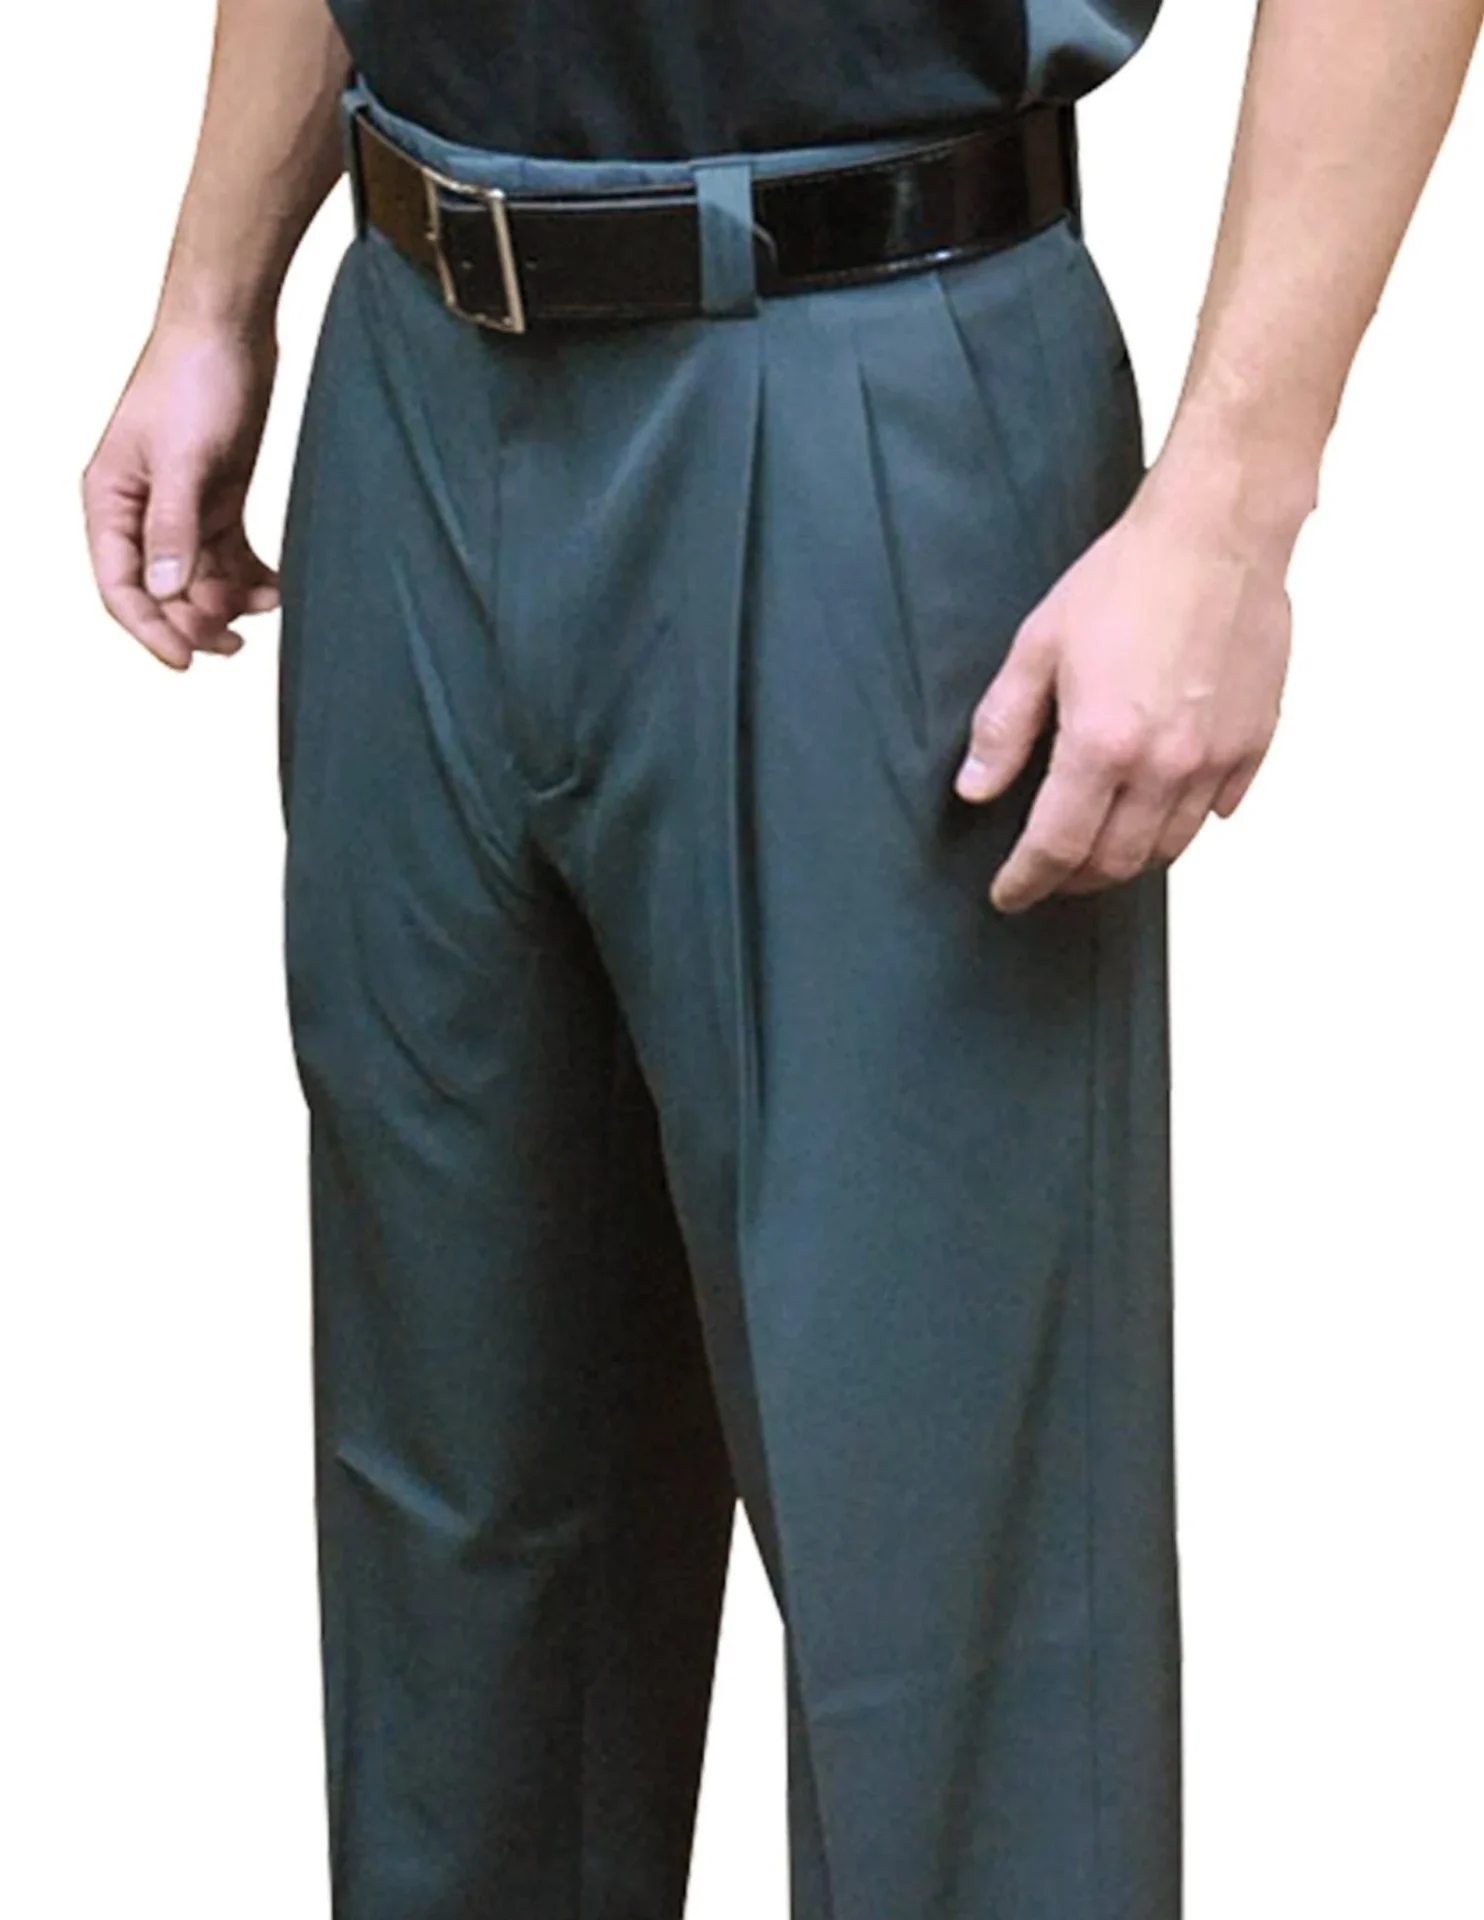 A man wearing a black belt and green pants.